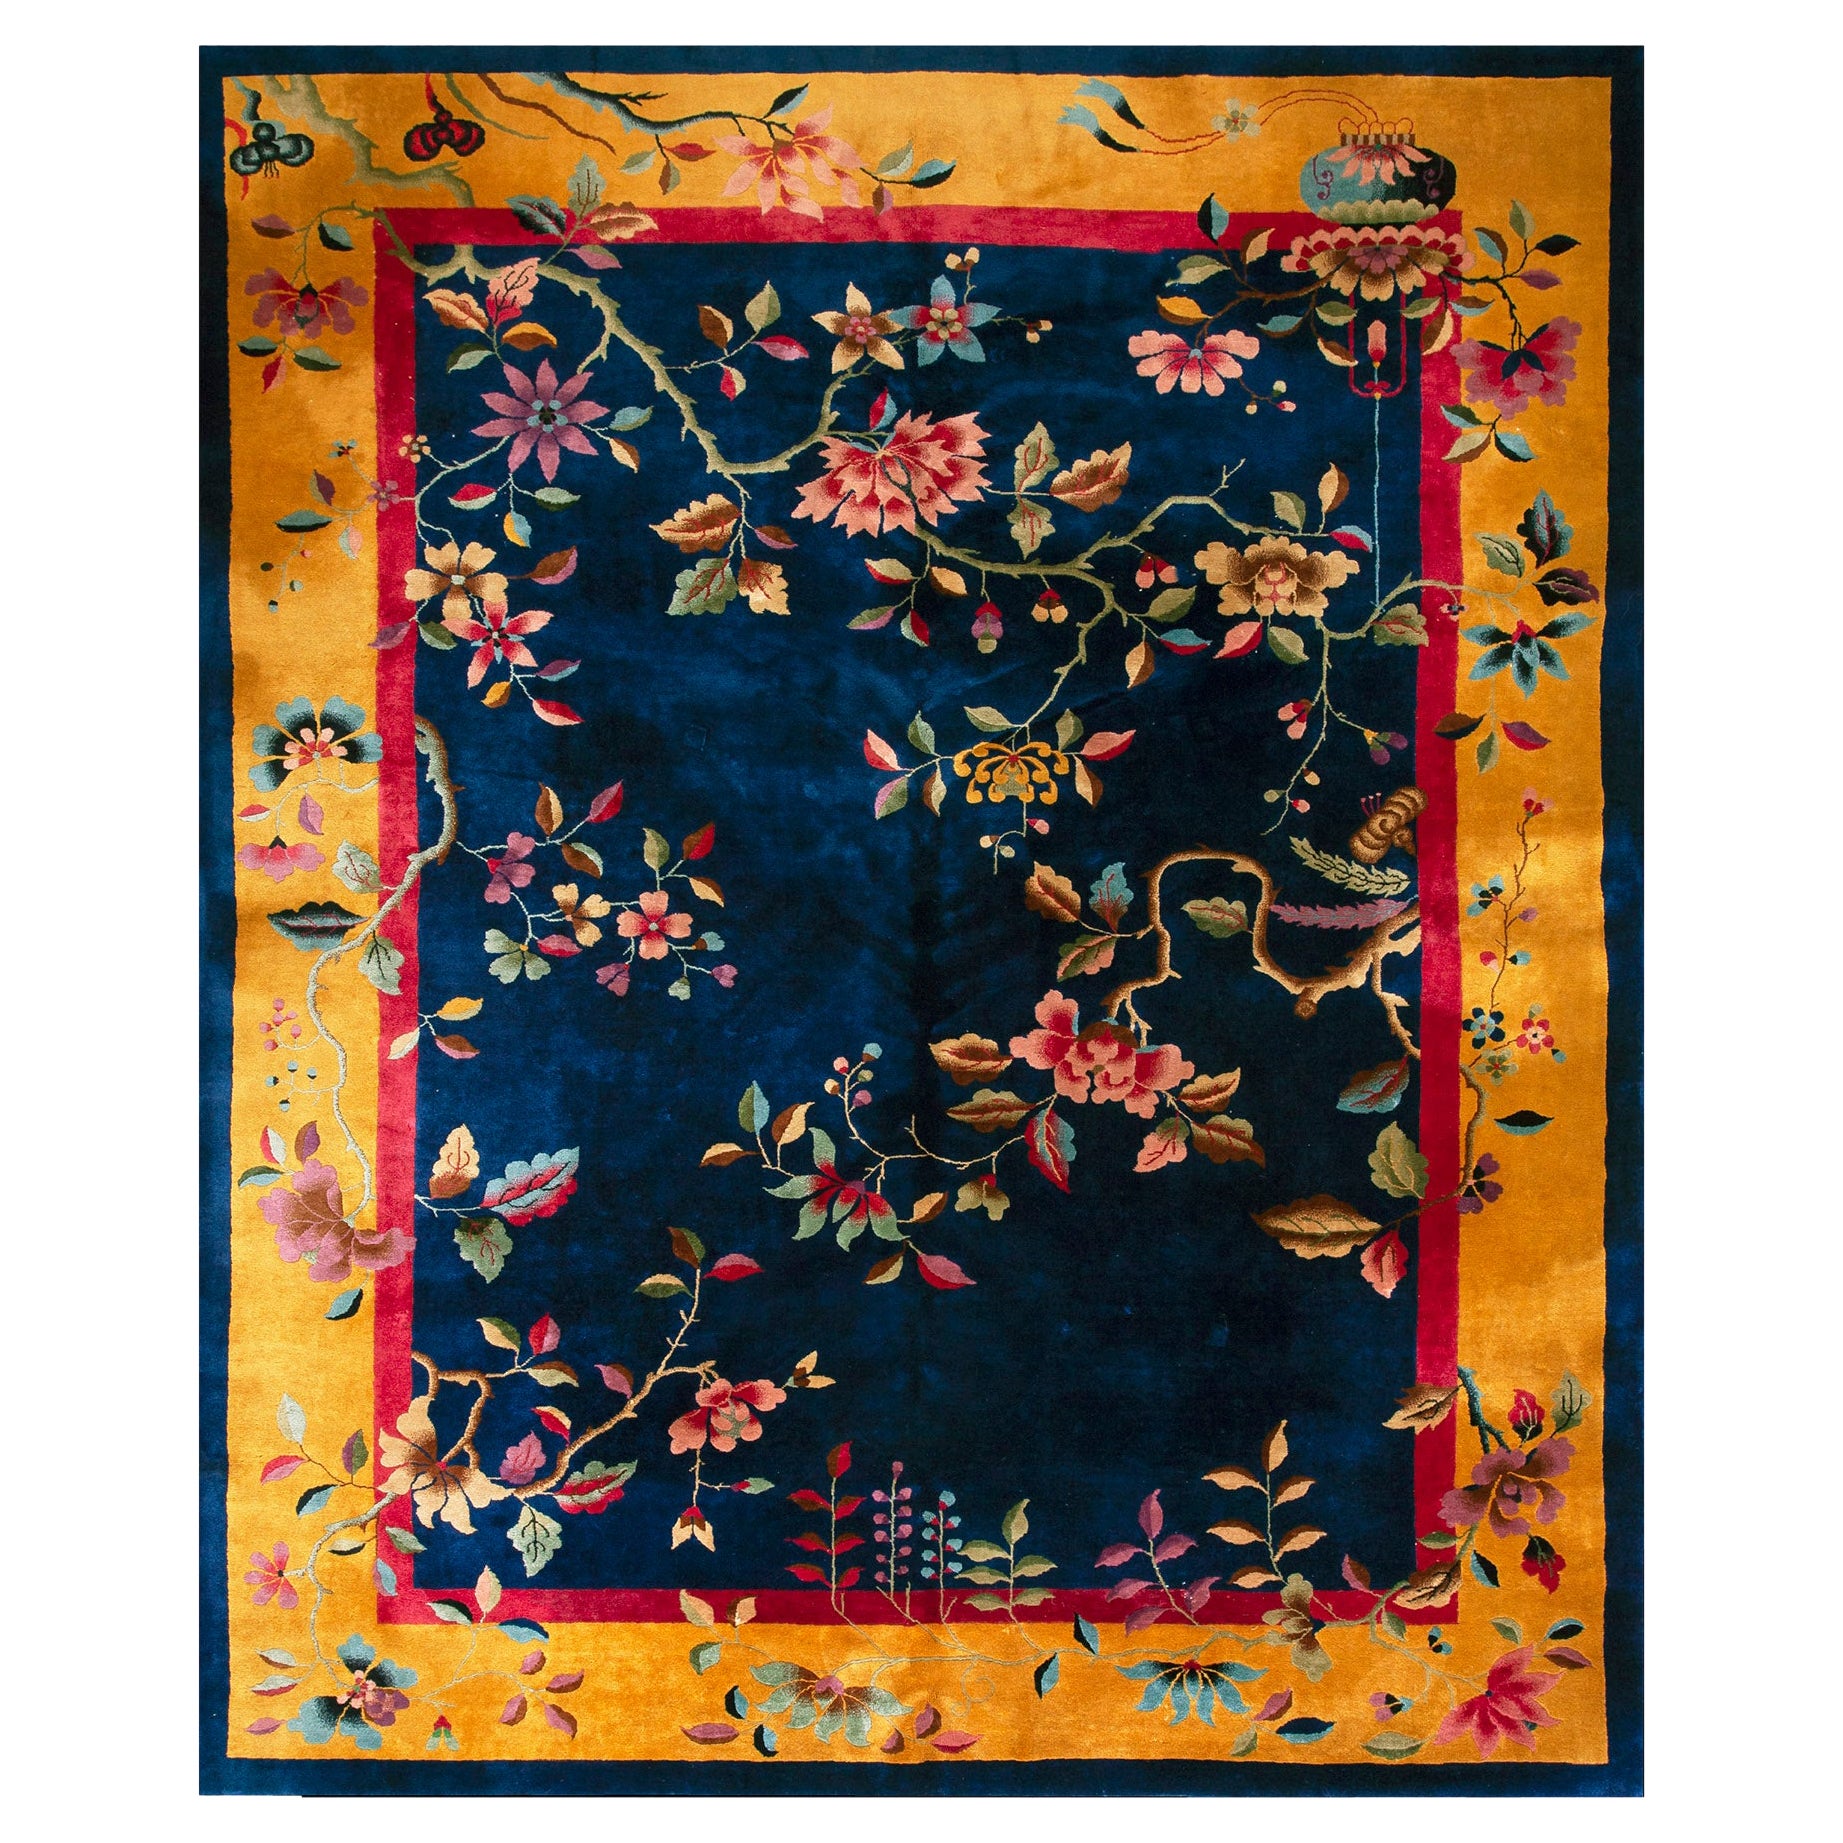 1920s Chinese Art Deco Carpet by Nichols Workshop ( 8'10" x 11'4" - 270 x 345 ) For Sale